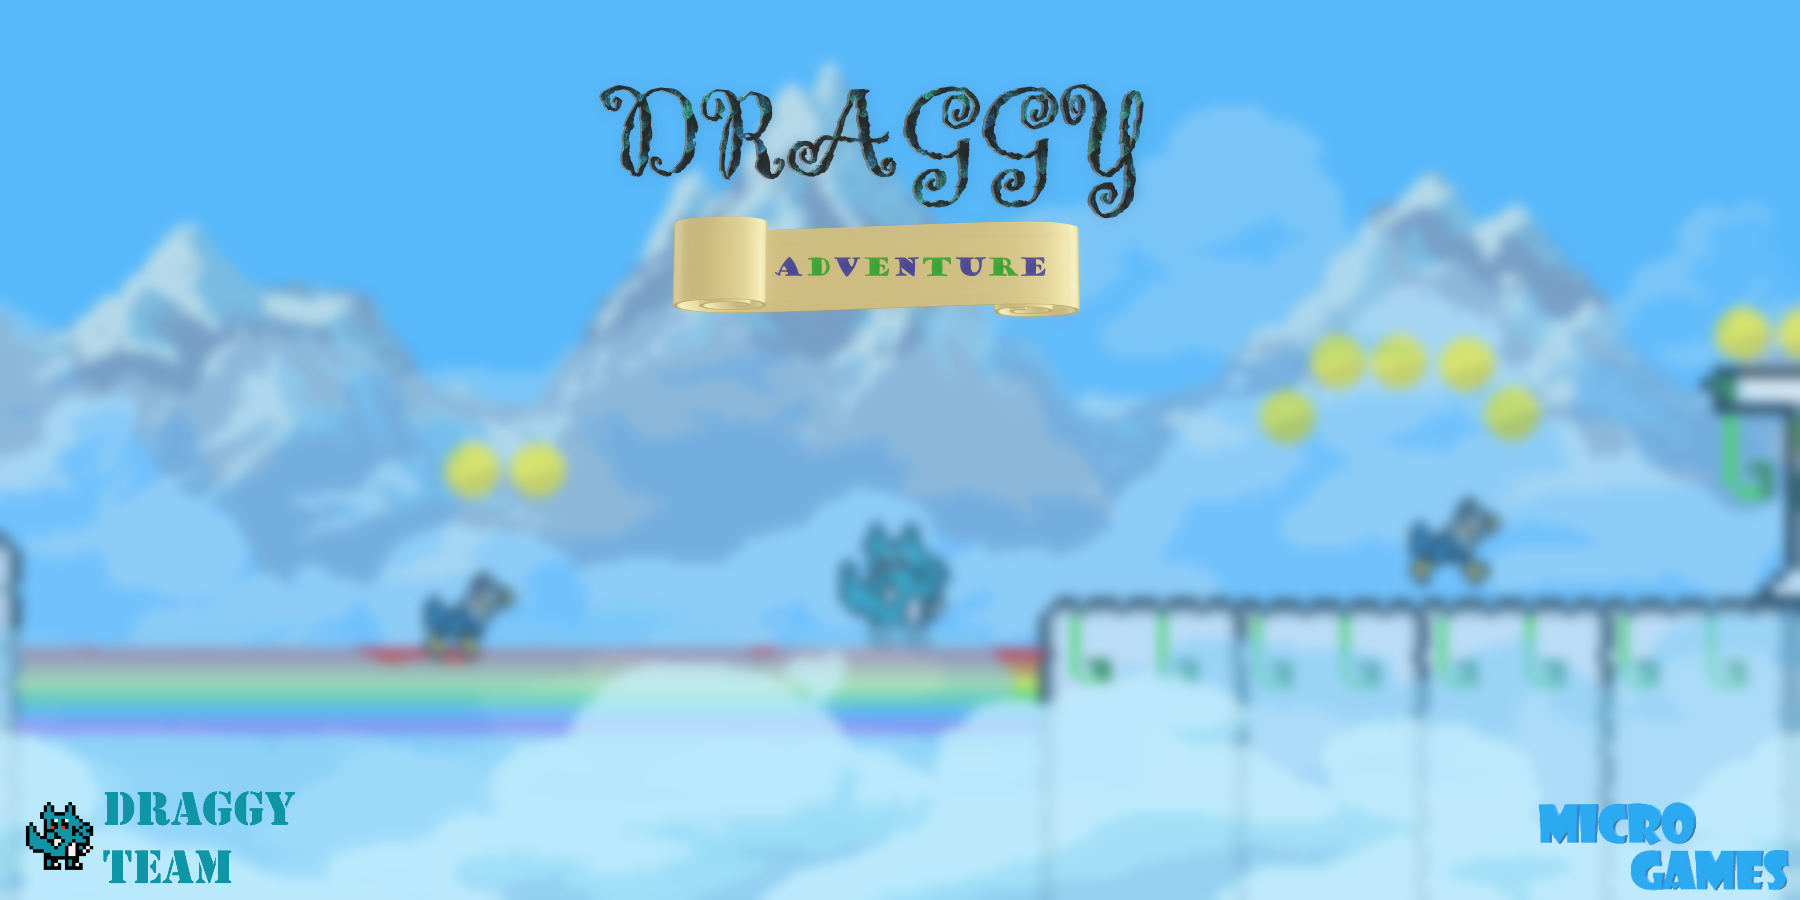 Draggy's Adventure